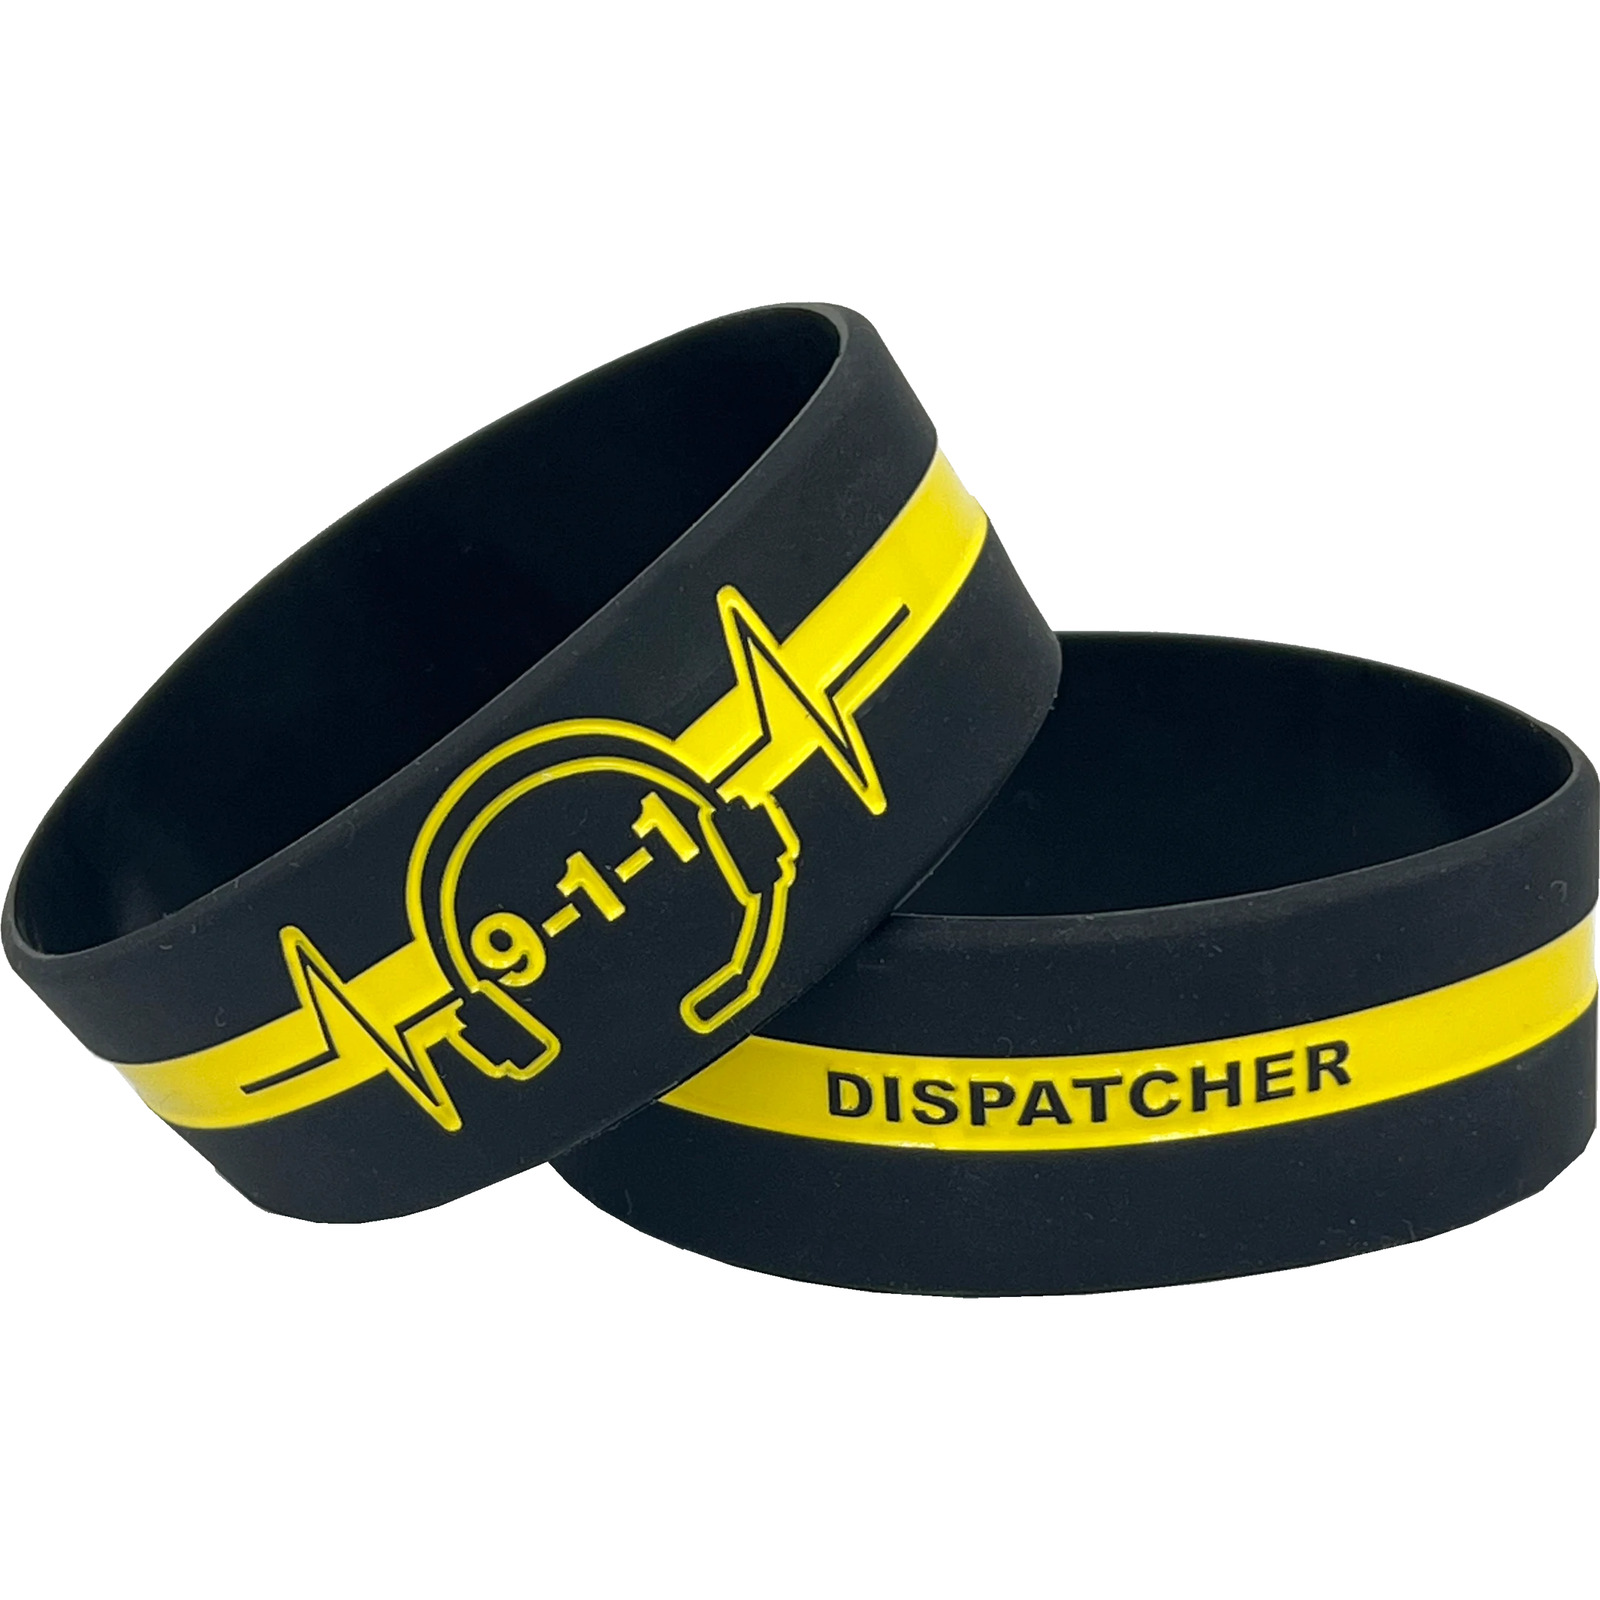 DL13-015 911 Headset Hero Thin Gold Line Silicon Bracelet (YELLOW) Dispatcher, E